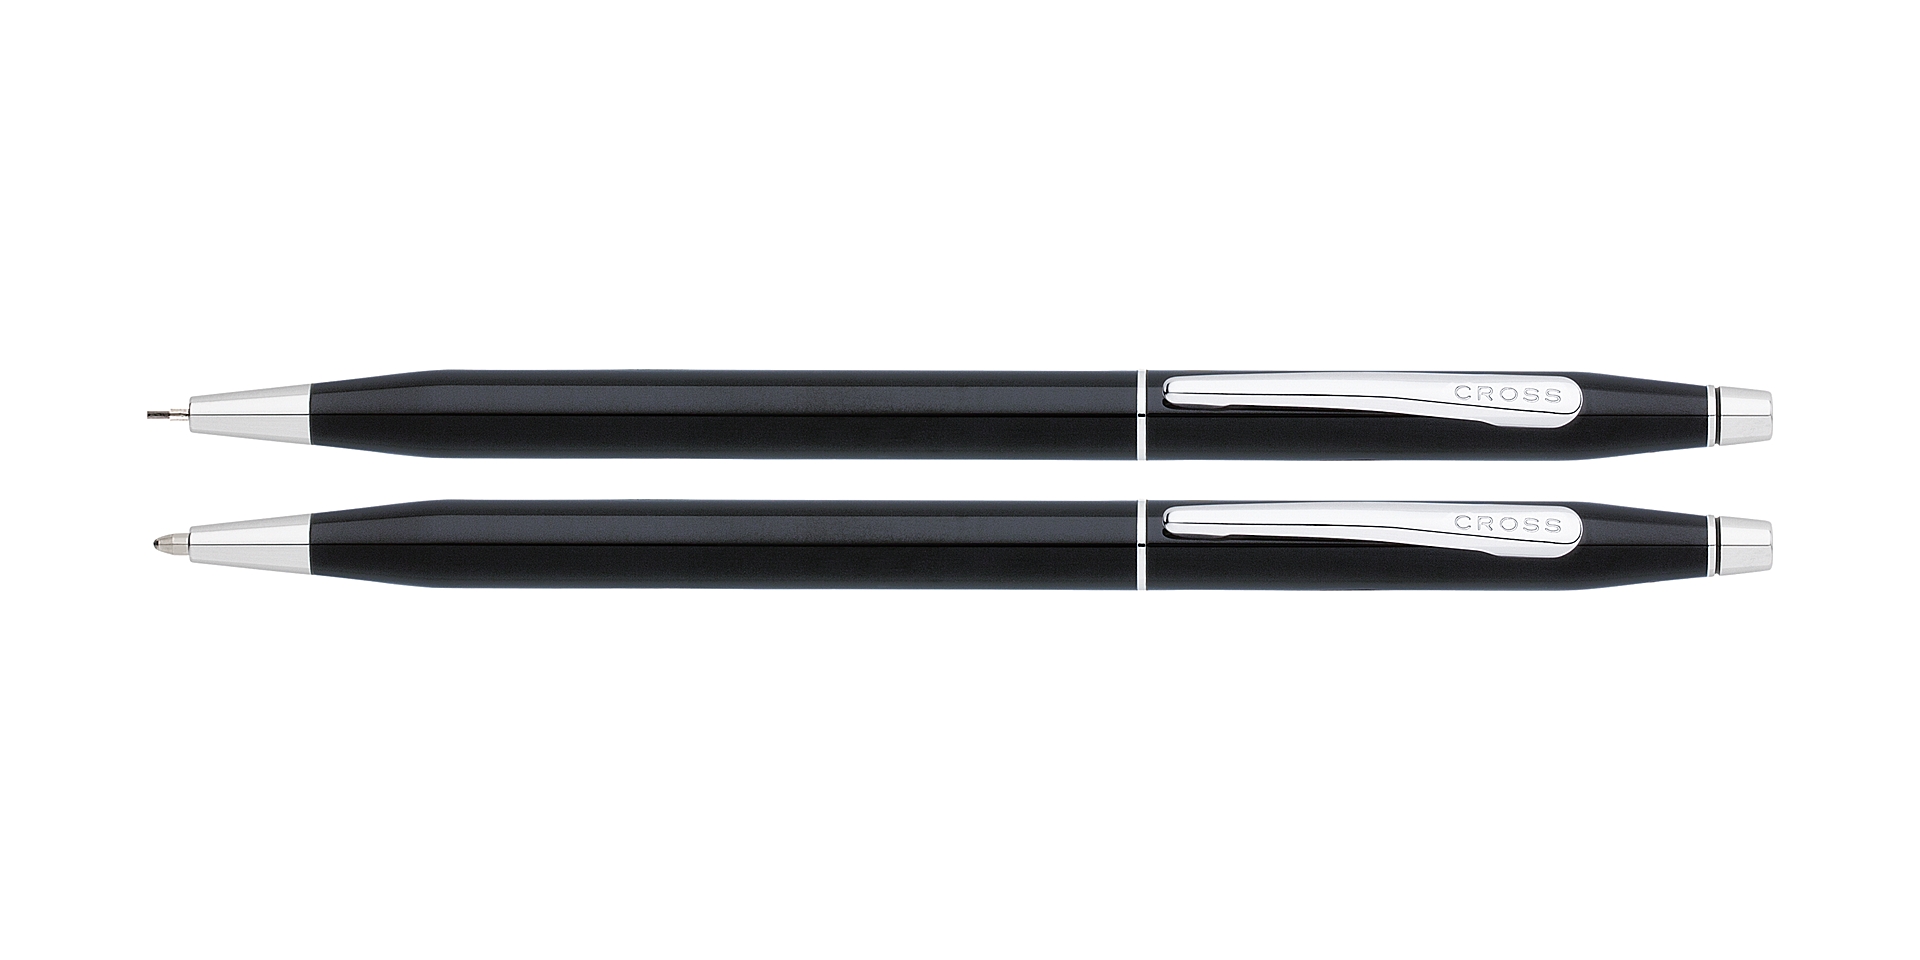 Cross Classic Century Black Lacquer Pen and Pencil Set Picture